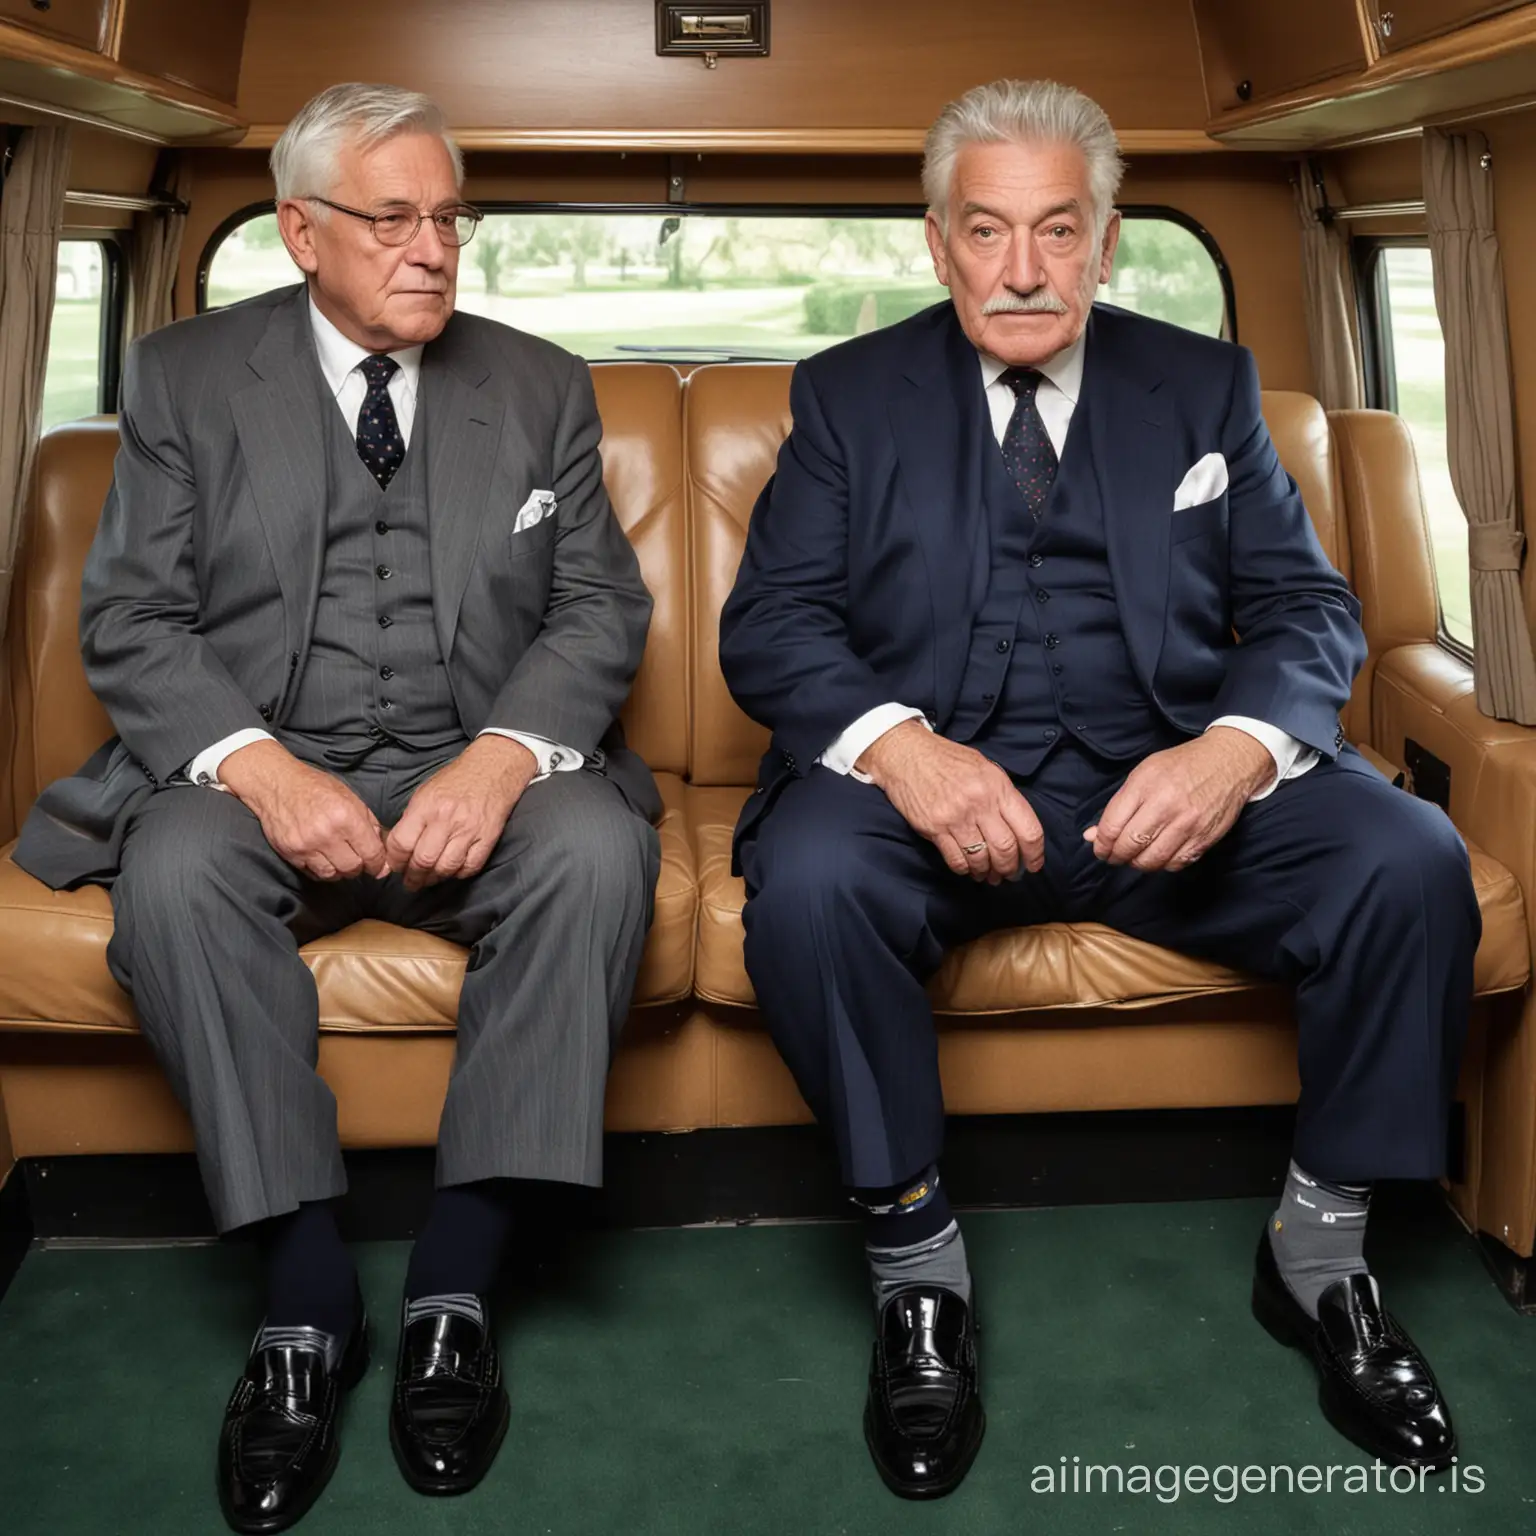 Elderly-Gentlemen-Relaxing-on-a-Couch-in-Stylish-Attire